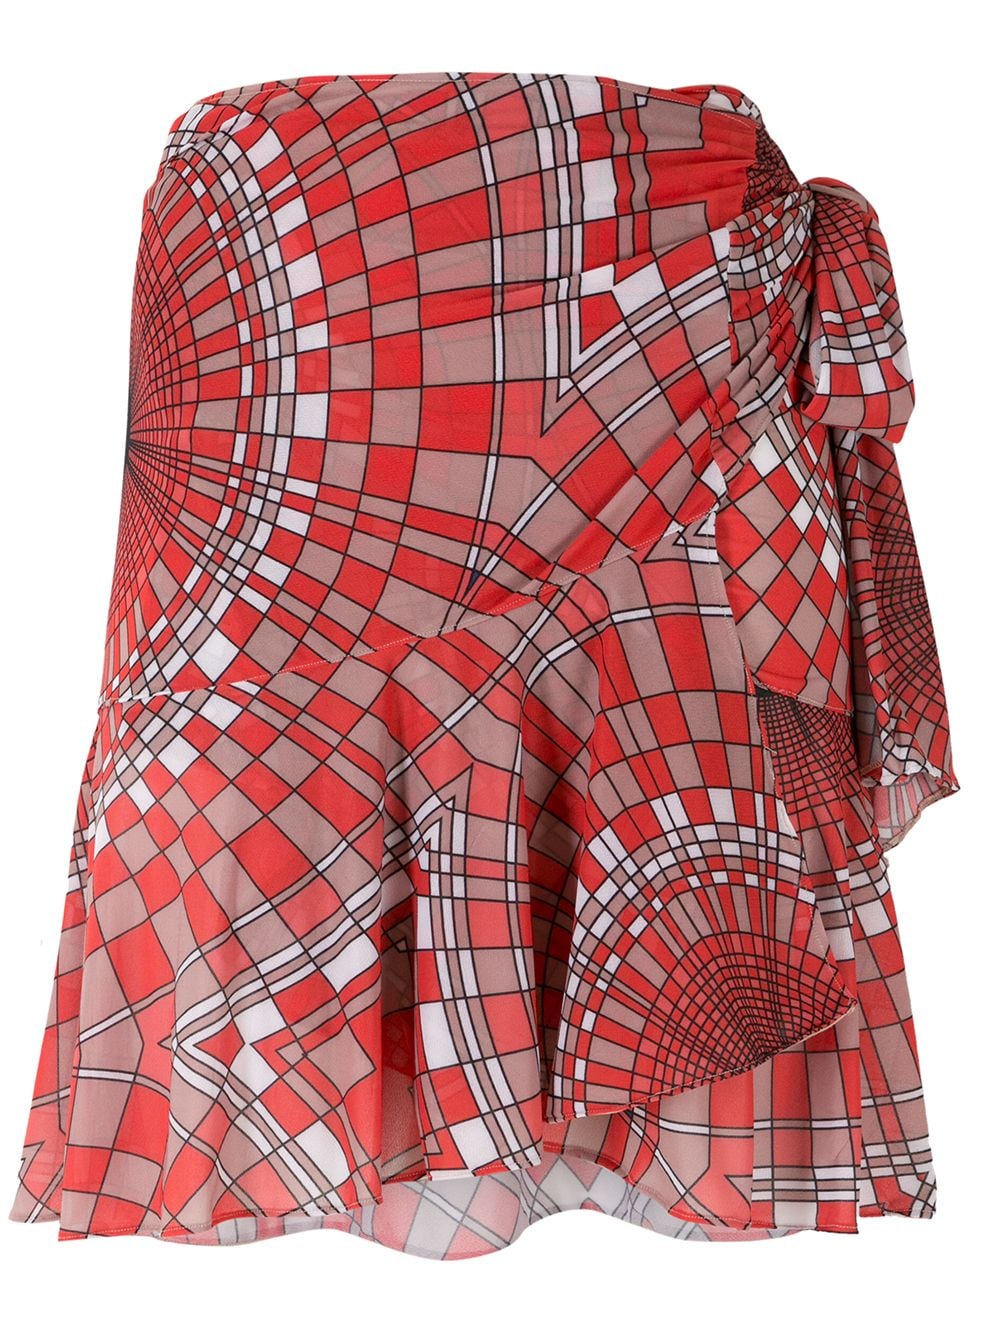 Image 1 of Amir Slama printed wrap skirt with panels